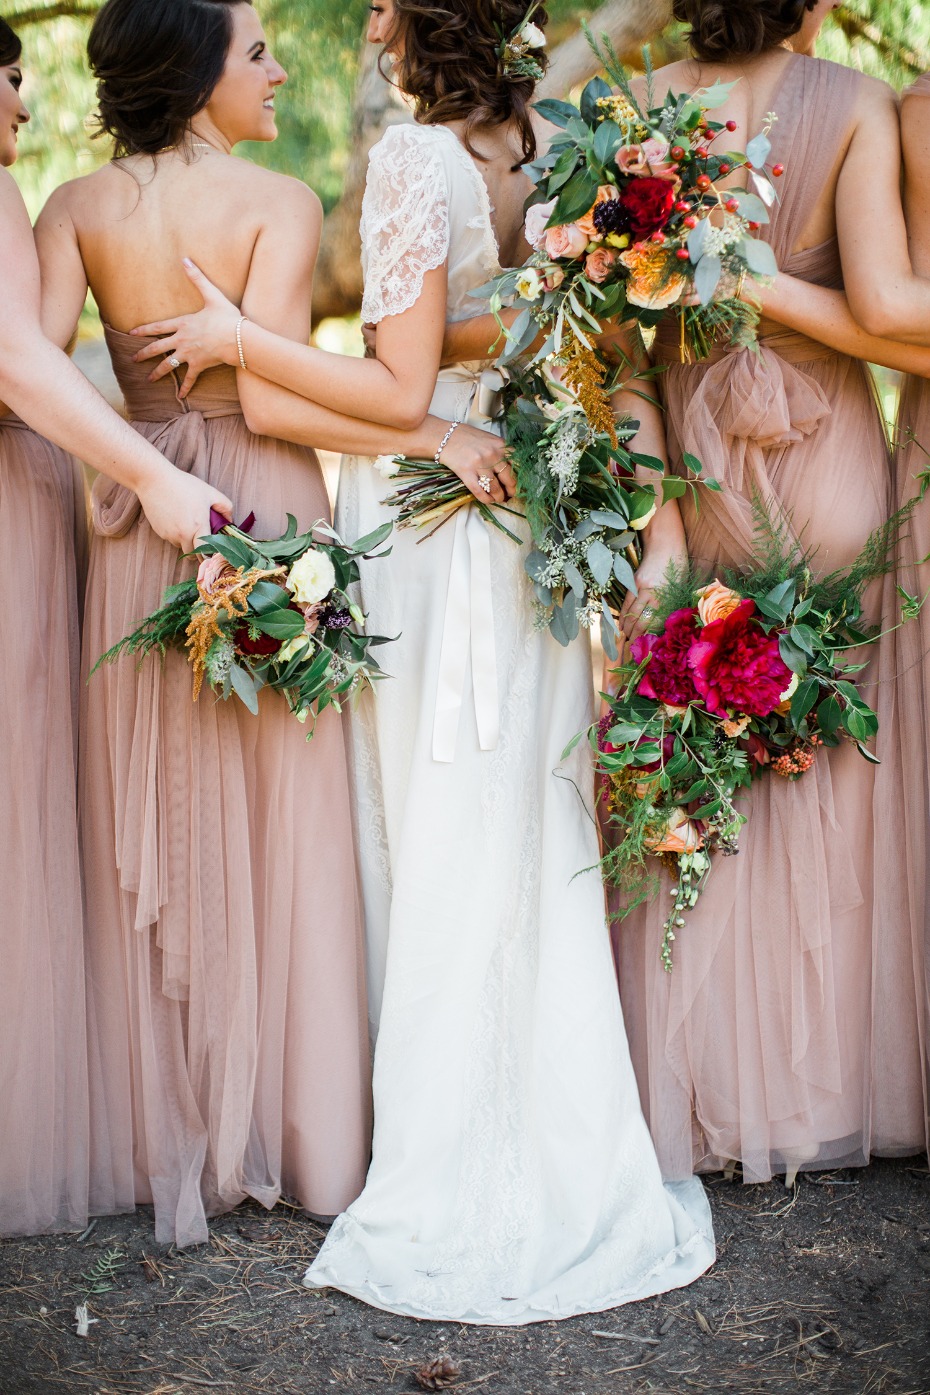 Bridal party in matching brown sugar bridesmaid dresses